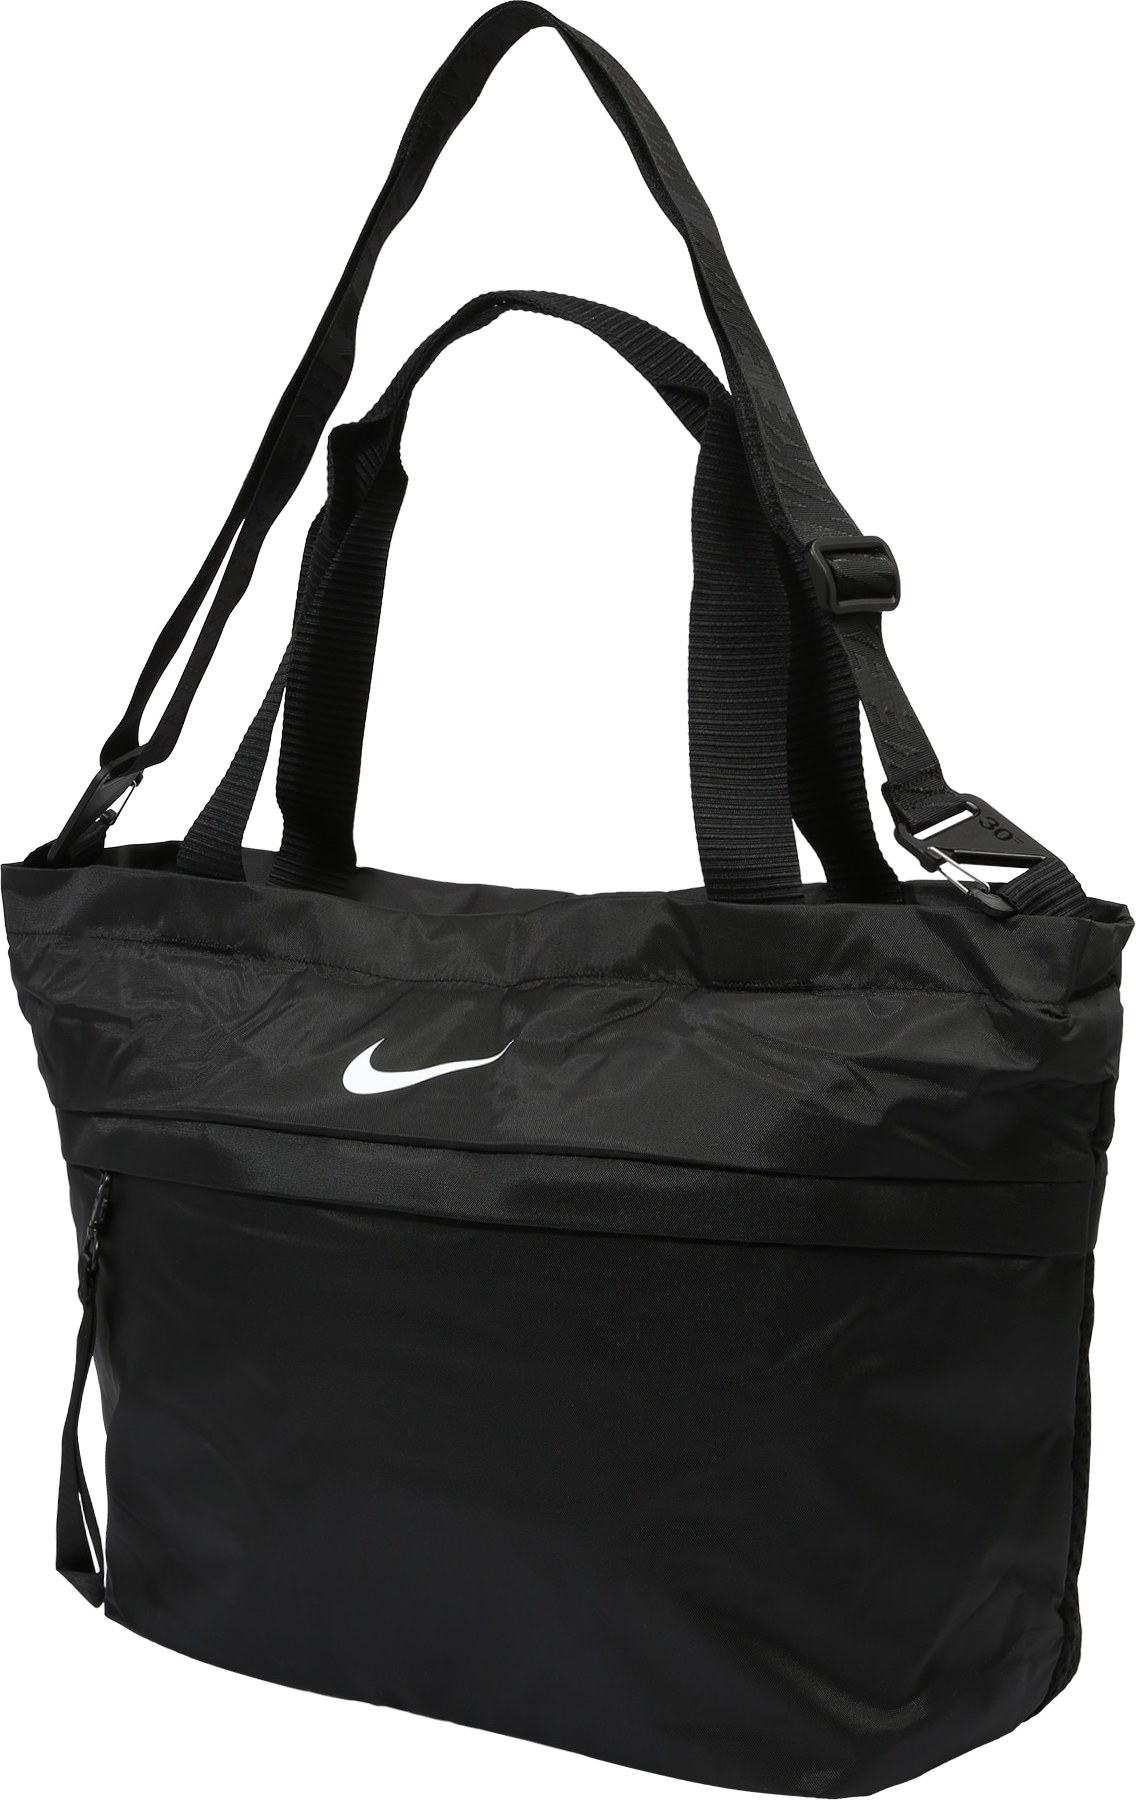 Nike Sportswear Nákupní taška černá / bílá